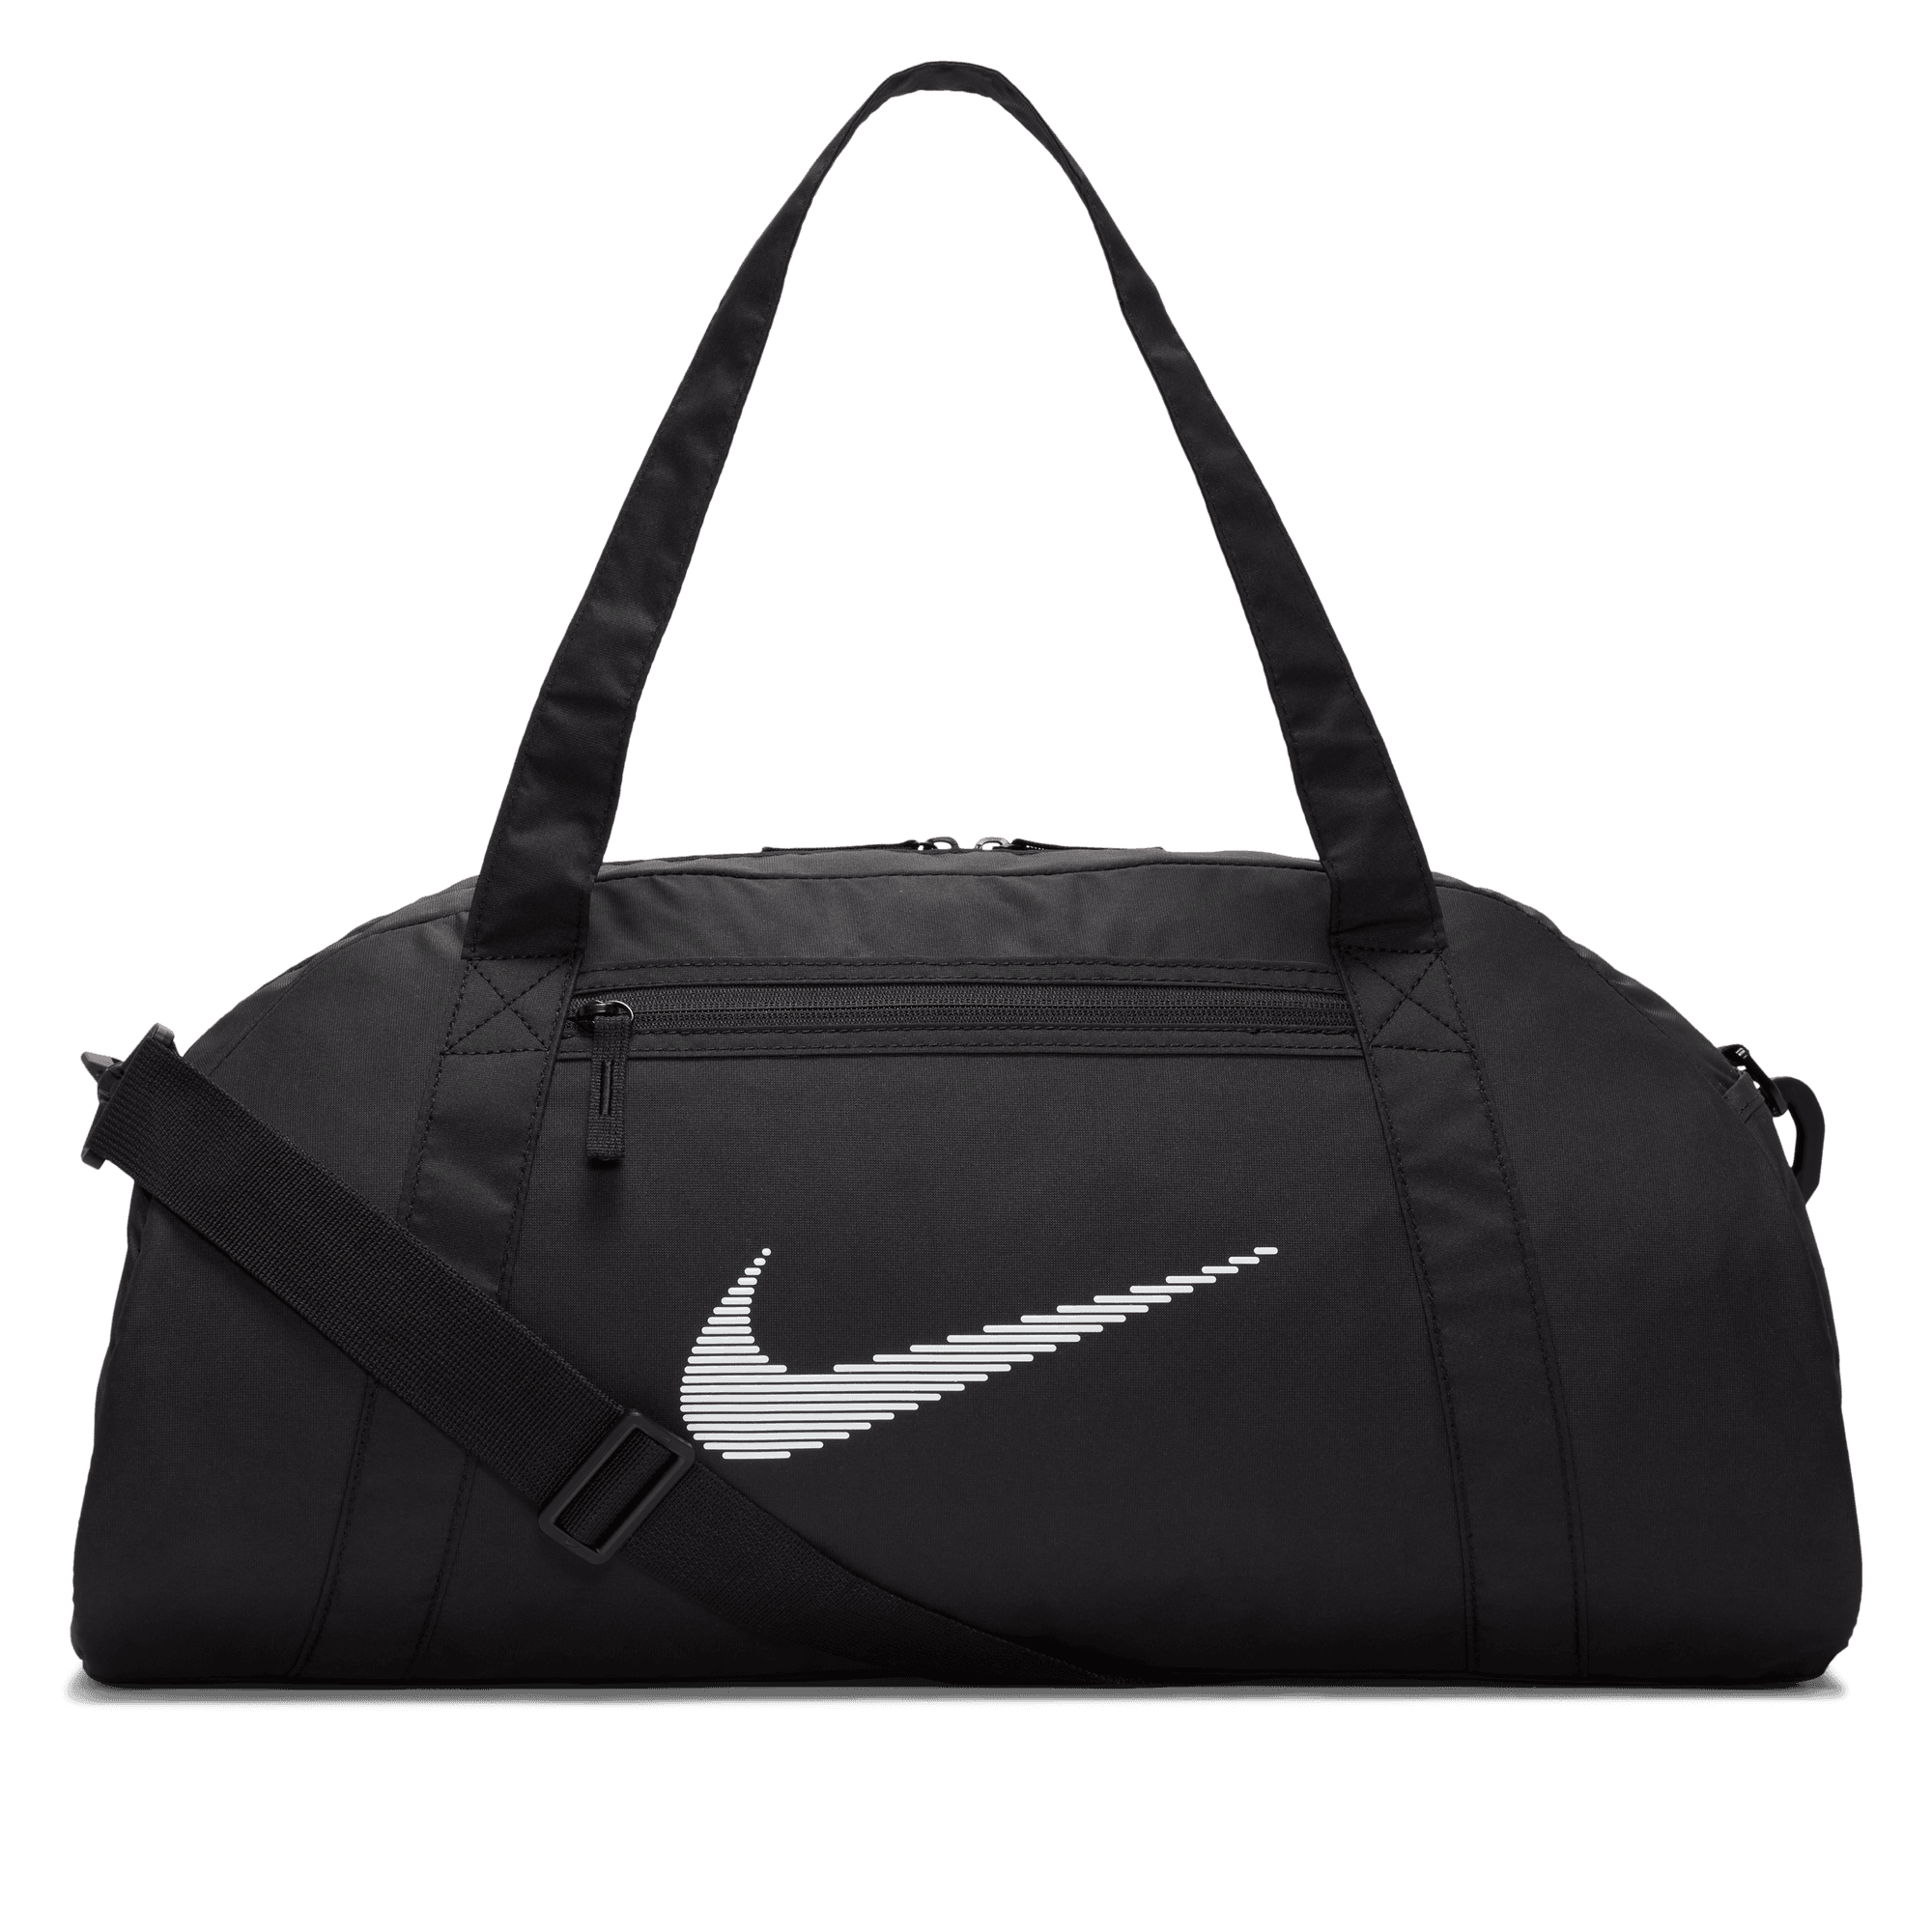 Brasilia 9.5 Training Duffel Bag (Extra-Small, 25L) from Nike